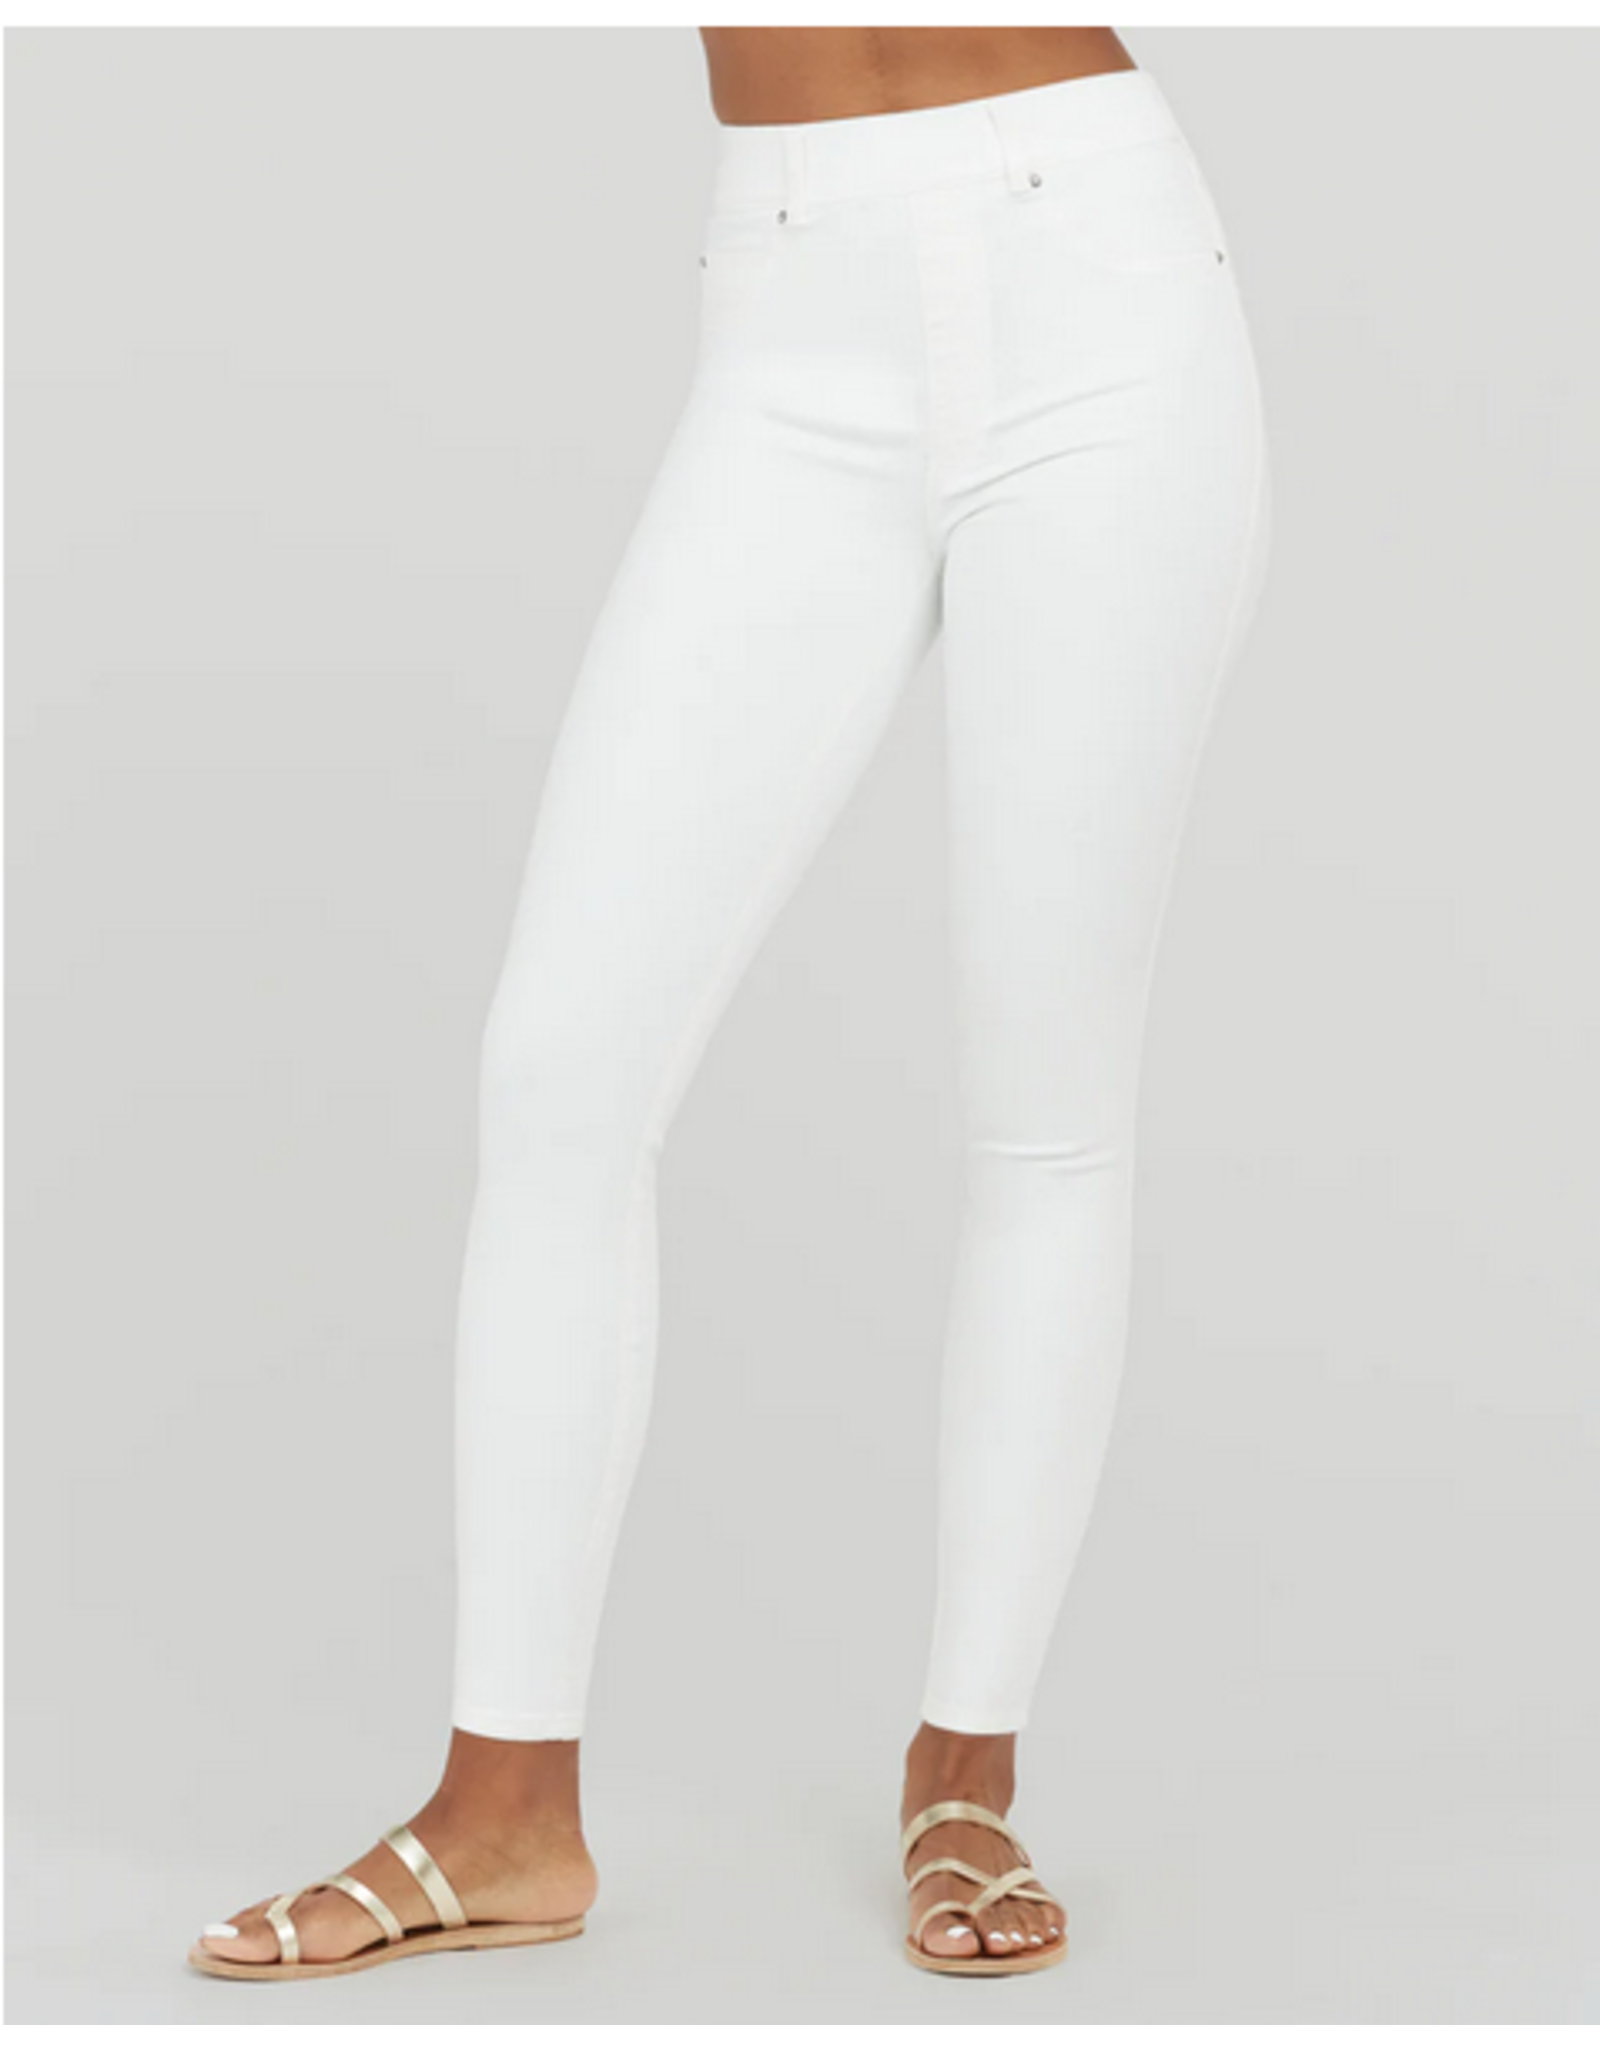  Spanx White Jeans